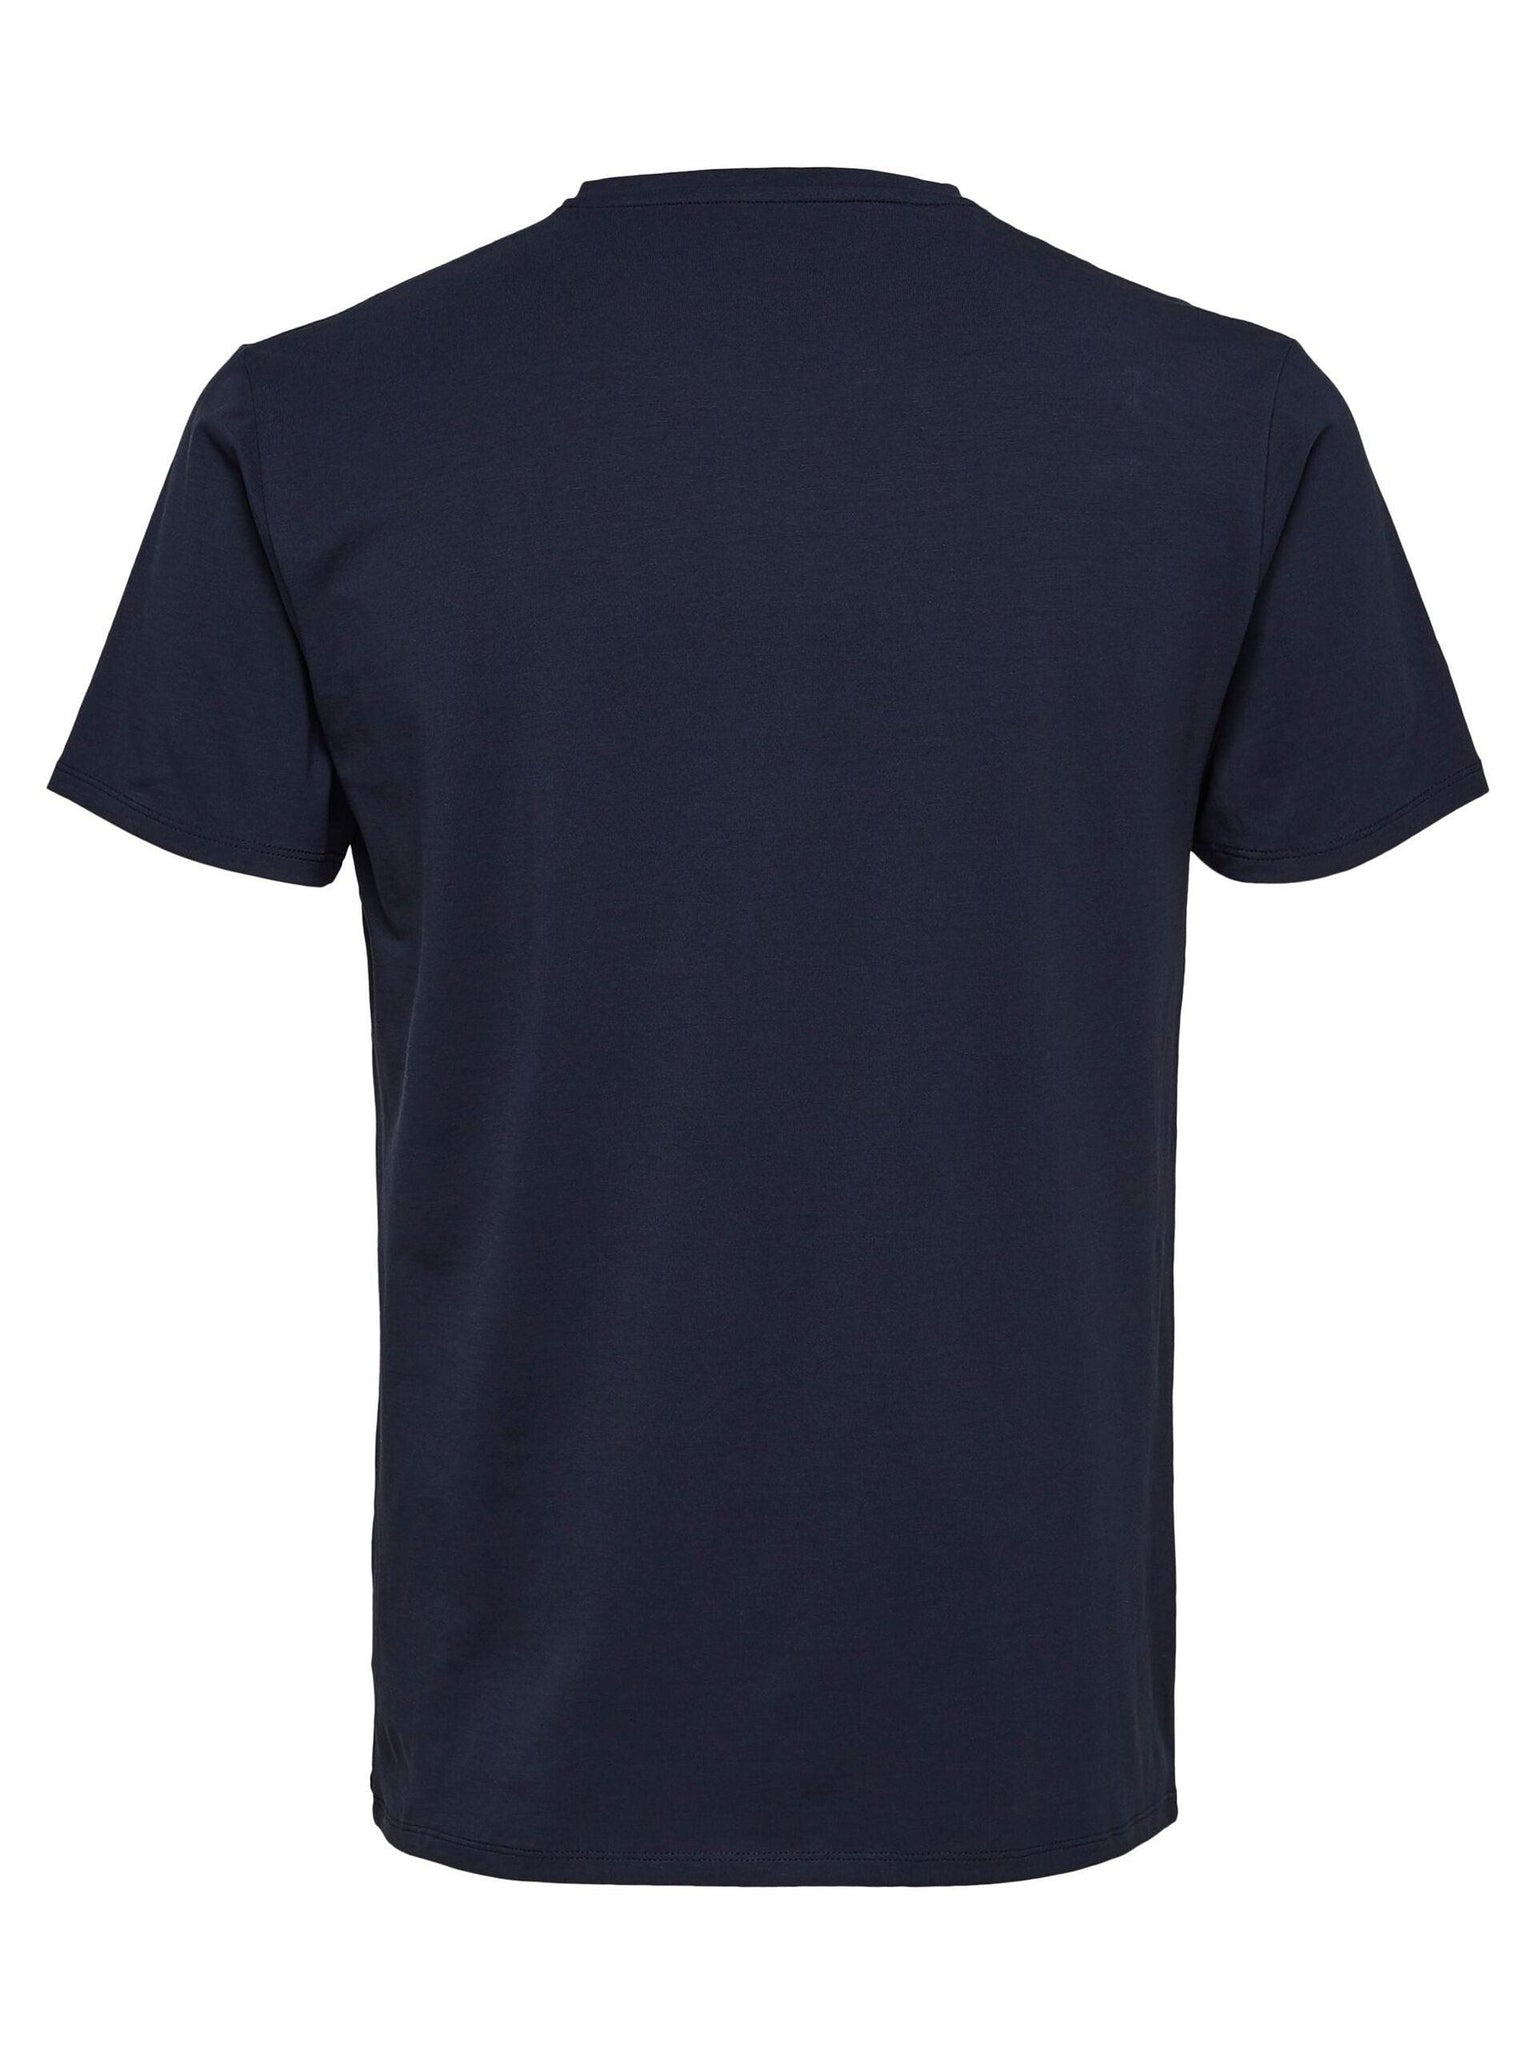 Camiseta New Pima Cuello Pico Navy Blazer - ECRU